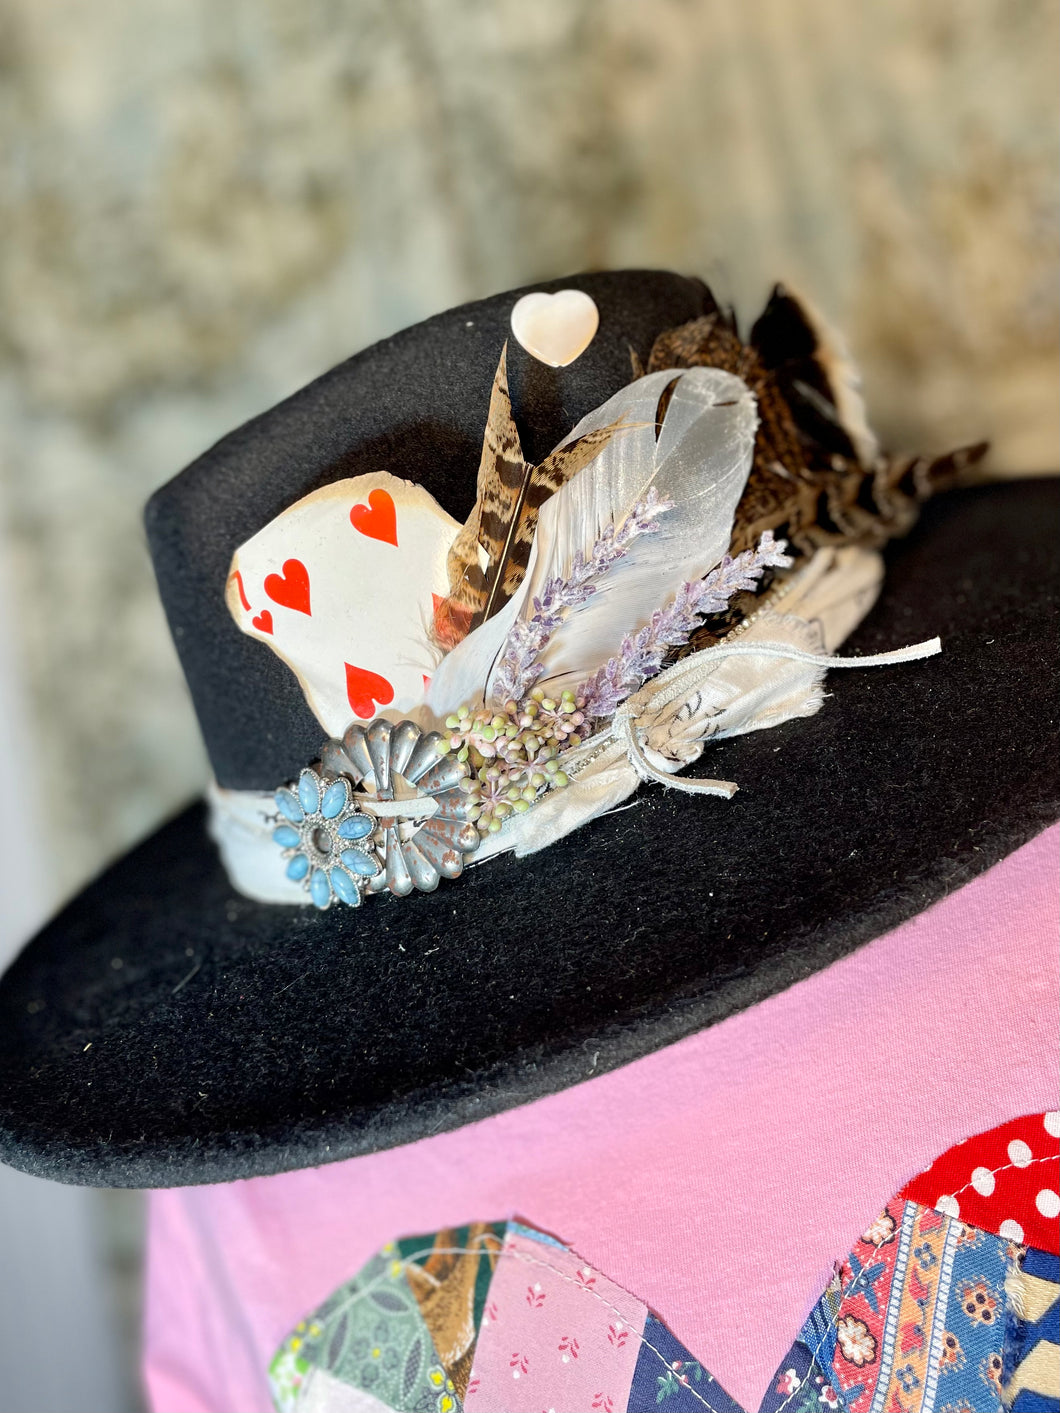 Custom Styled Black Wide Brim Hat Boho Western Women's Flea Market Round Top